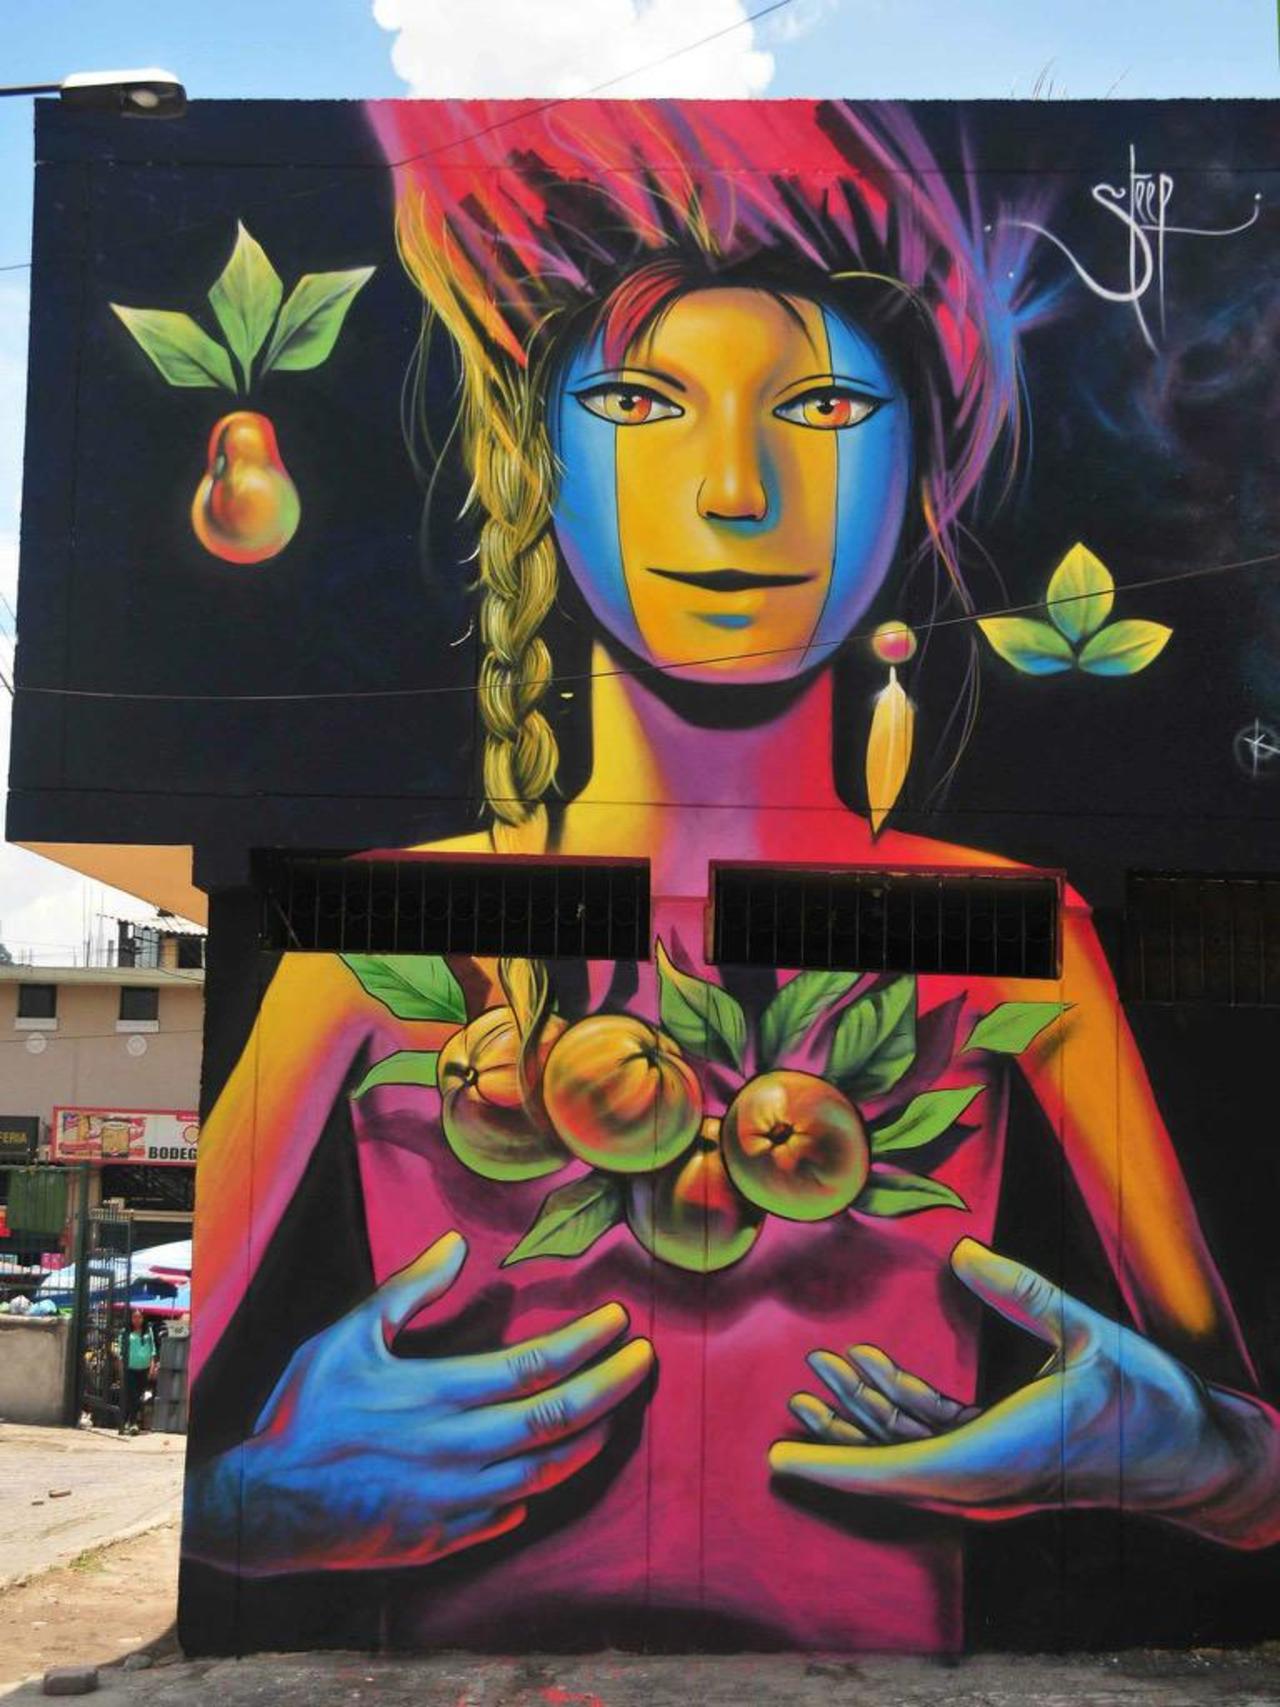 Street Art by Steep #art #graffiti #mural #streetart http://t.co/dKGIfl0HiR http://twitter.com/GoogleStreetArt/status/652717552435638272/photo/1/large?utm_source=fb&utm_medium=fb&utm_campaign=charlesjackso14&utm_content=652720469402103808 … … … … http://twitter.com/GoogleStreetArt/status/652717552435638272/photo/1/large?utm_source=fb&utm_medium=fb&utm_campaign=charlesjackso14&utm_content=652732440641974272